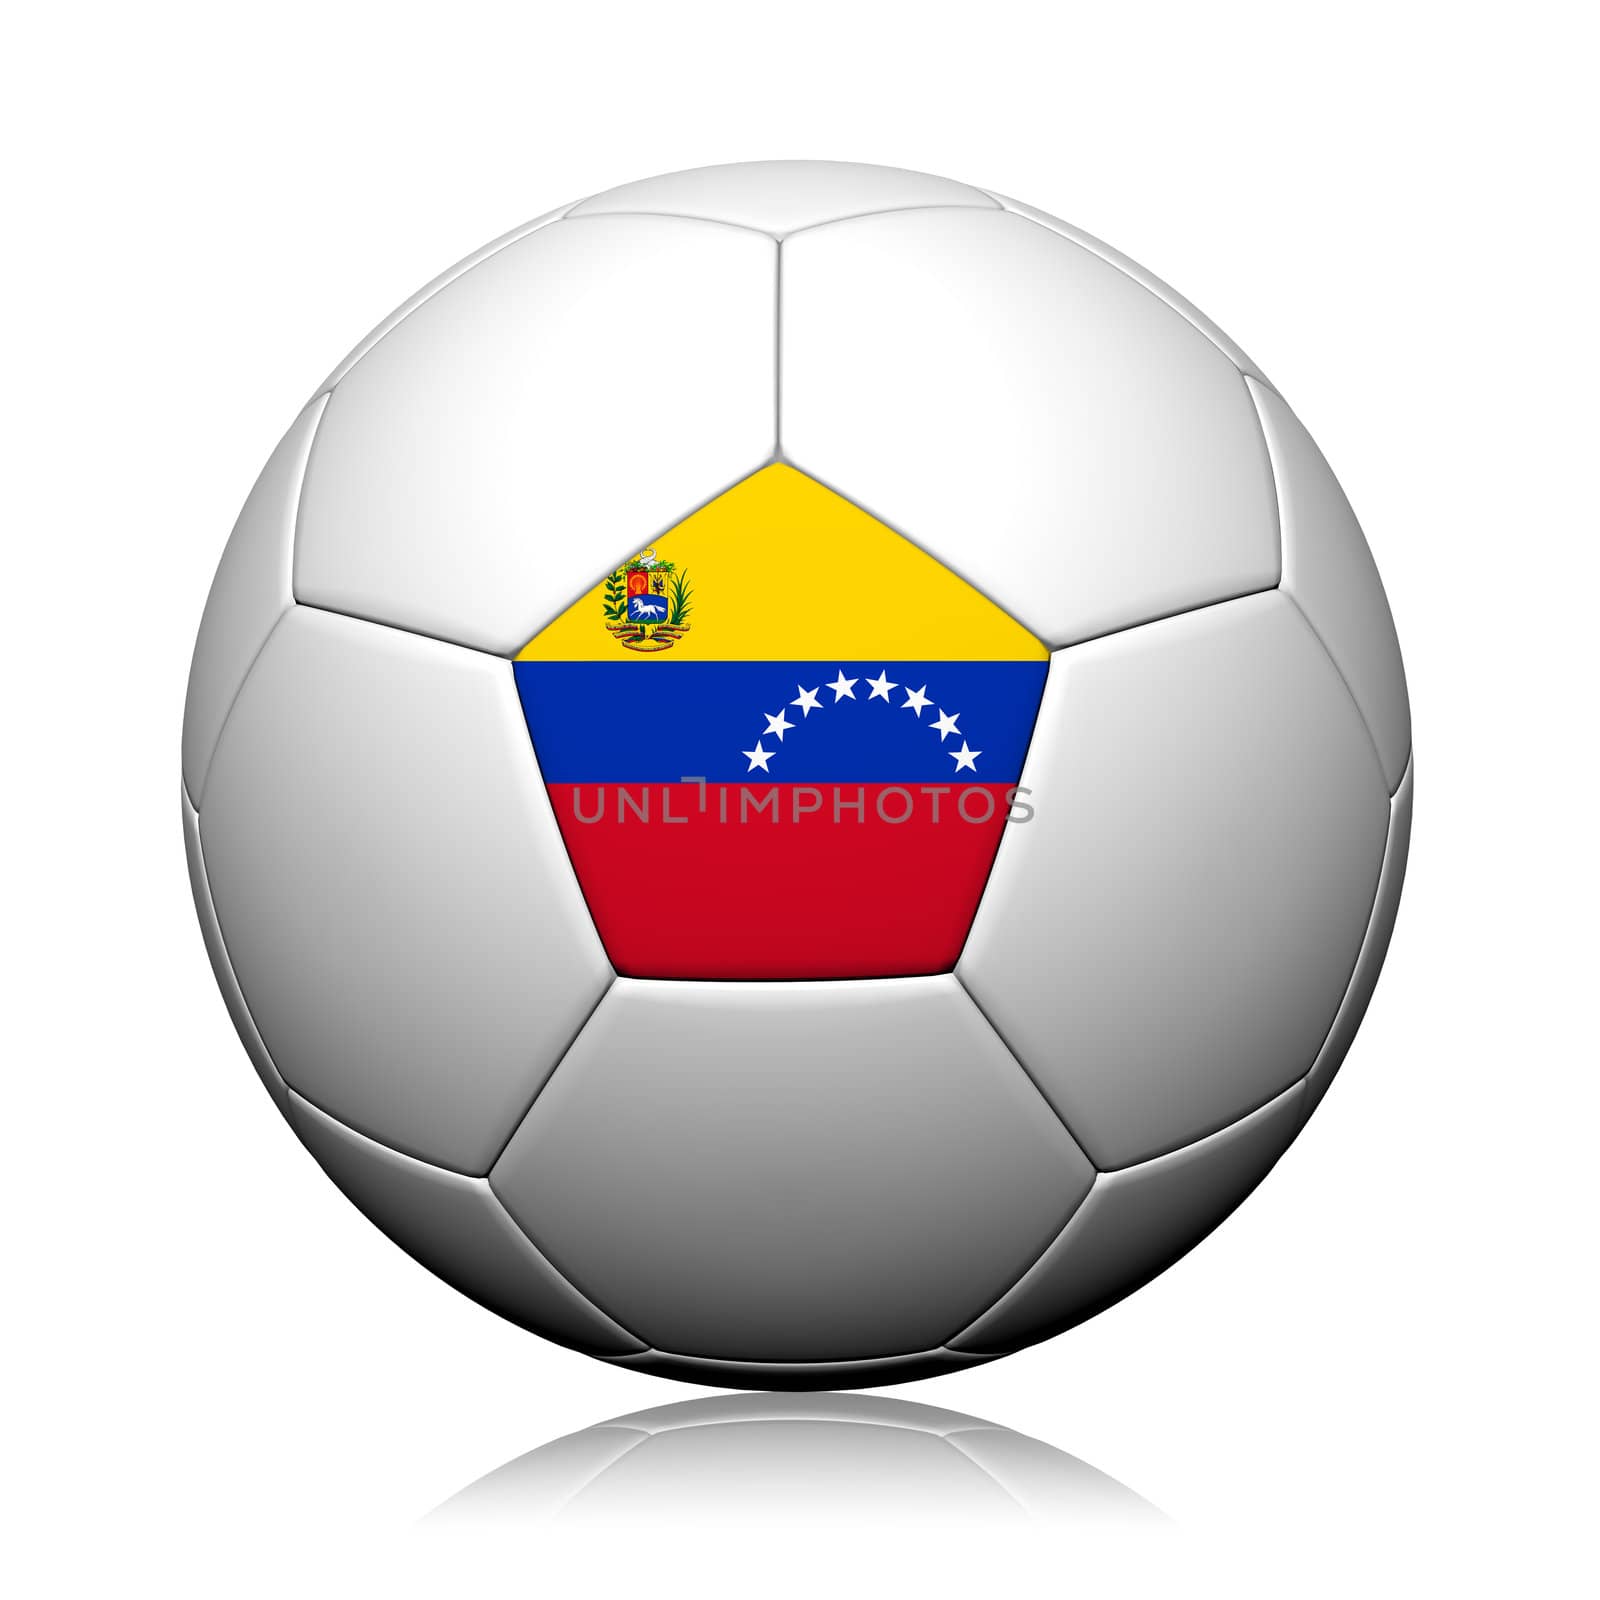 Venezuela Flag Pattern 3d rendering of a soccer ball by jakgree